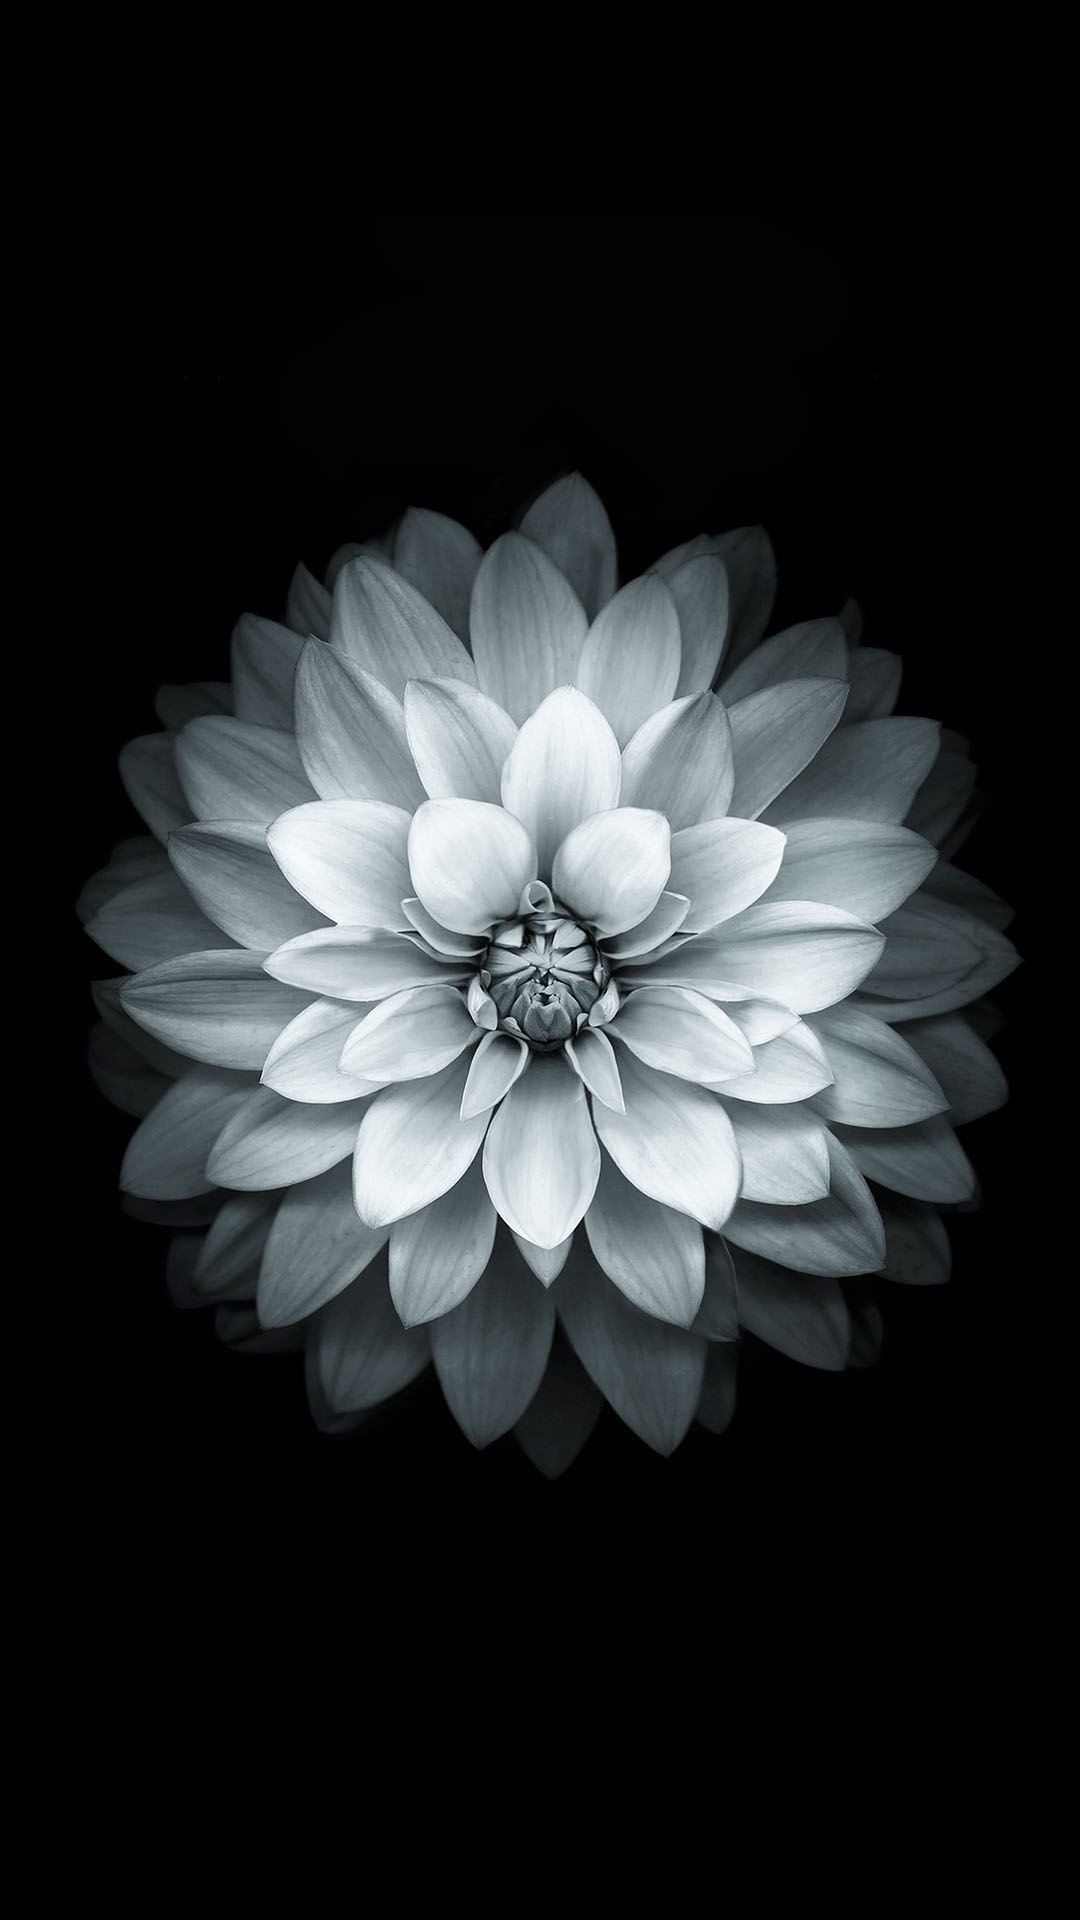 1080x1920 Download Black White Apple Lotus Flower Android Wallpaper